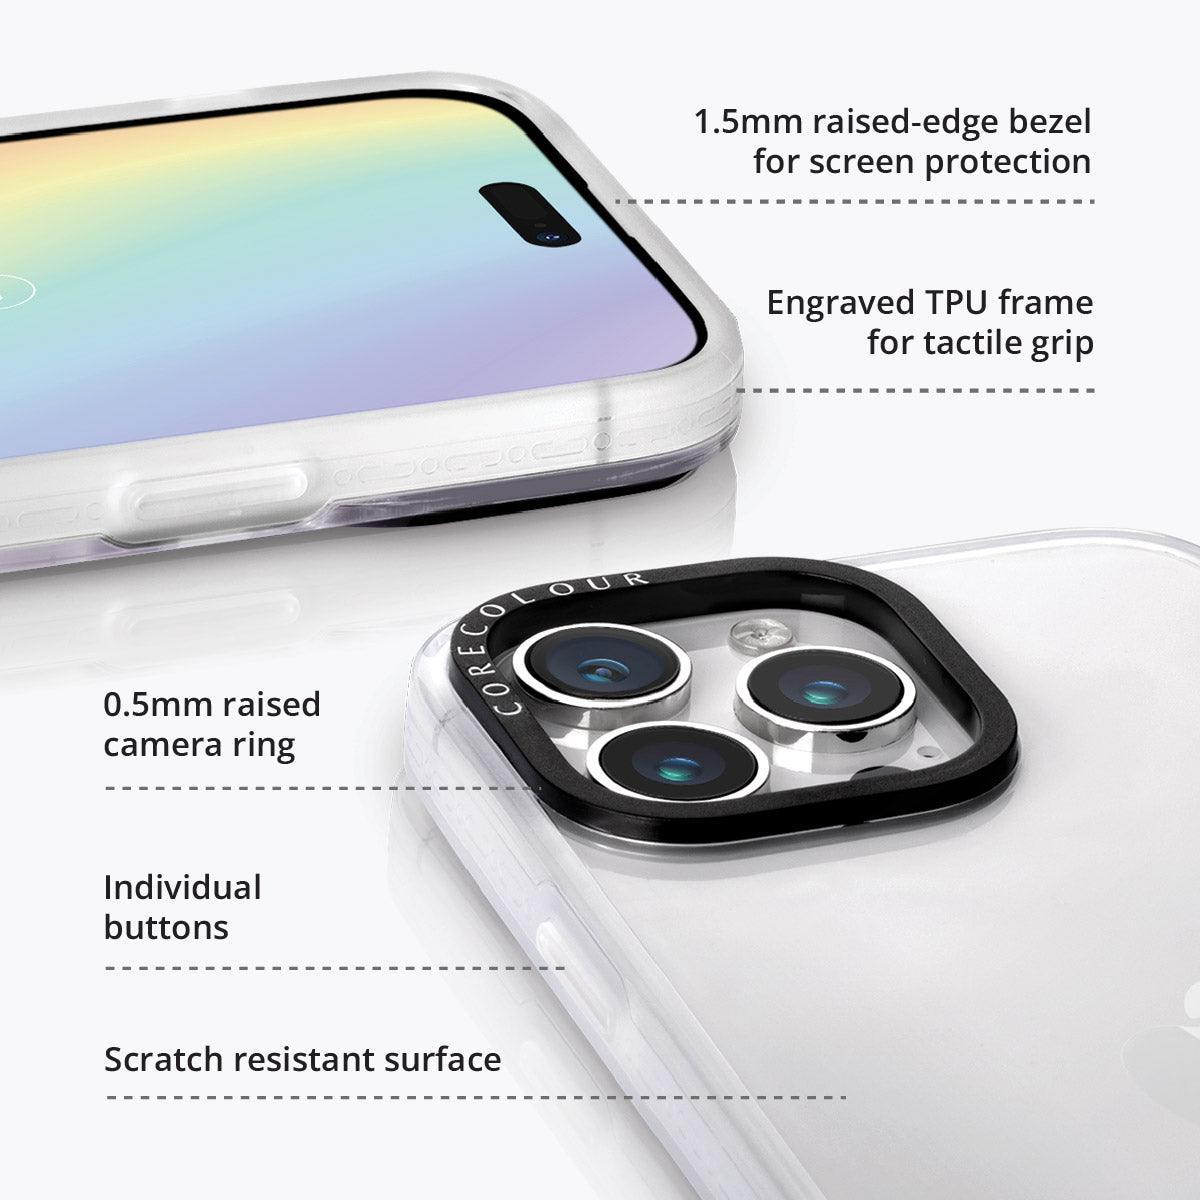 iPhone 12 Pro Max Sketching Panda Phone Case MagSafe Compatible 